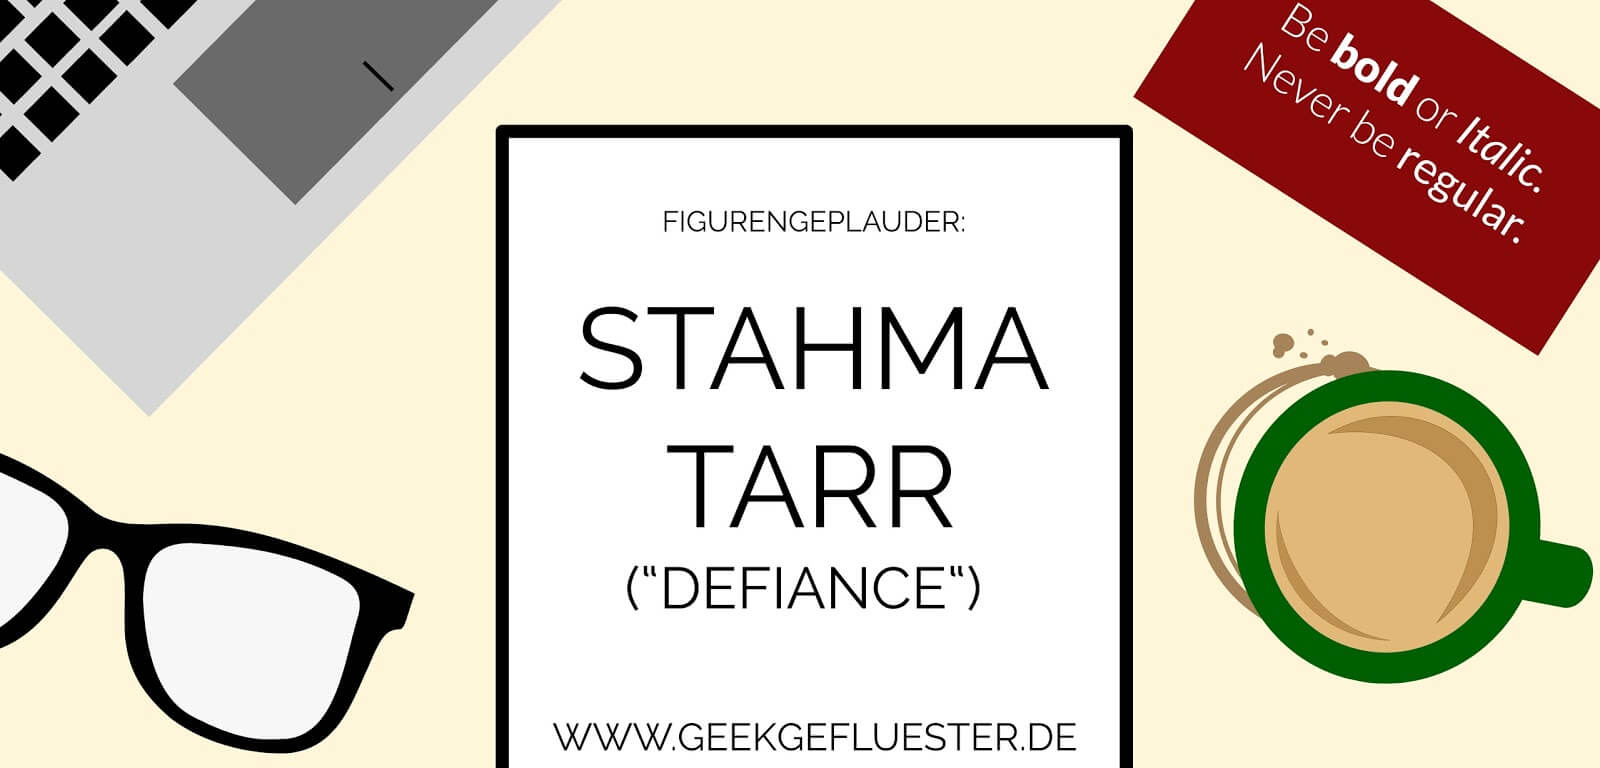 Stahma Tarr